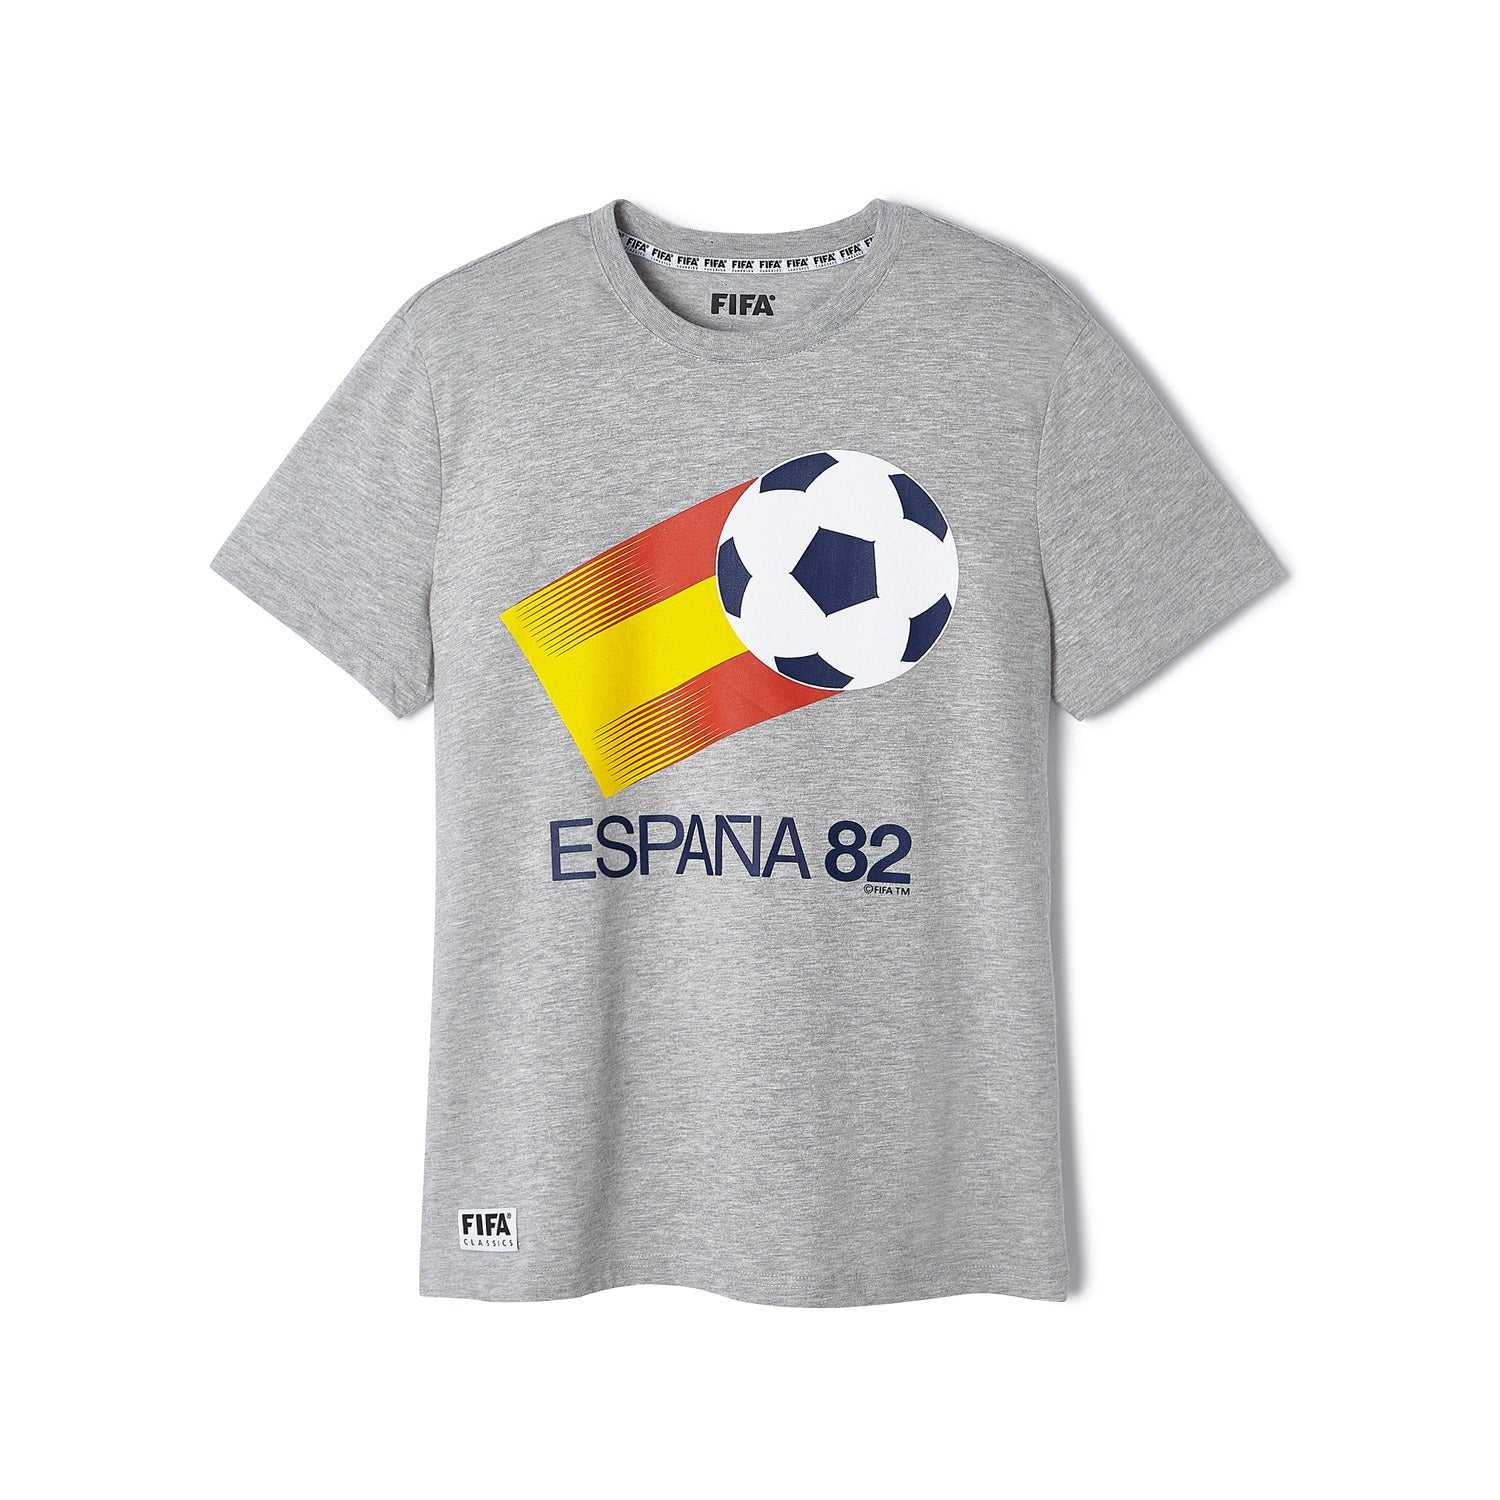 FIFA Rewind Spain '82 Emblem T-Shirt - Men's